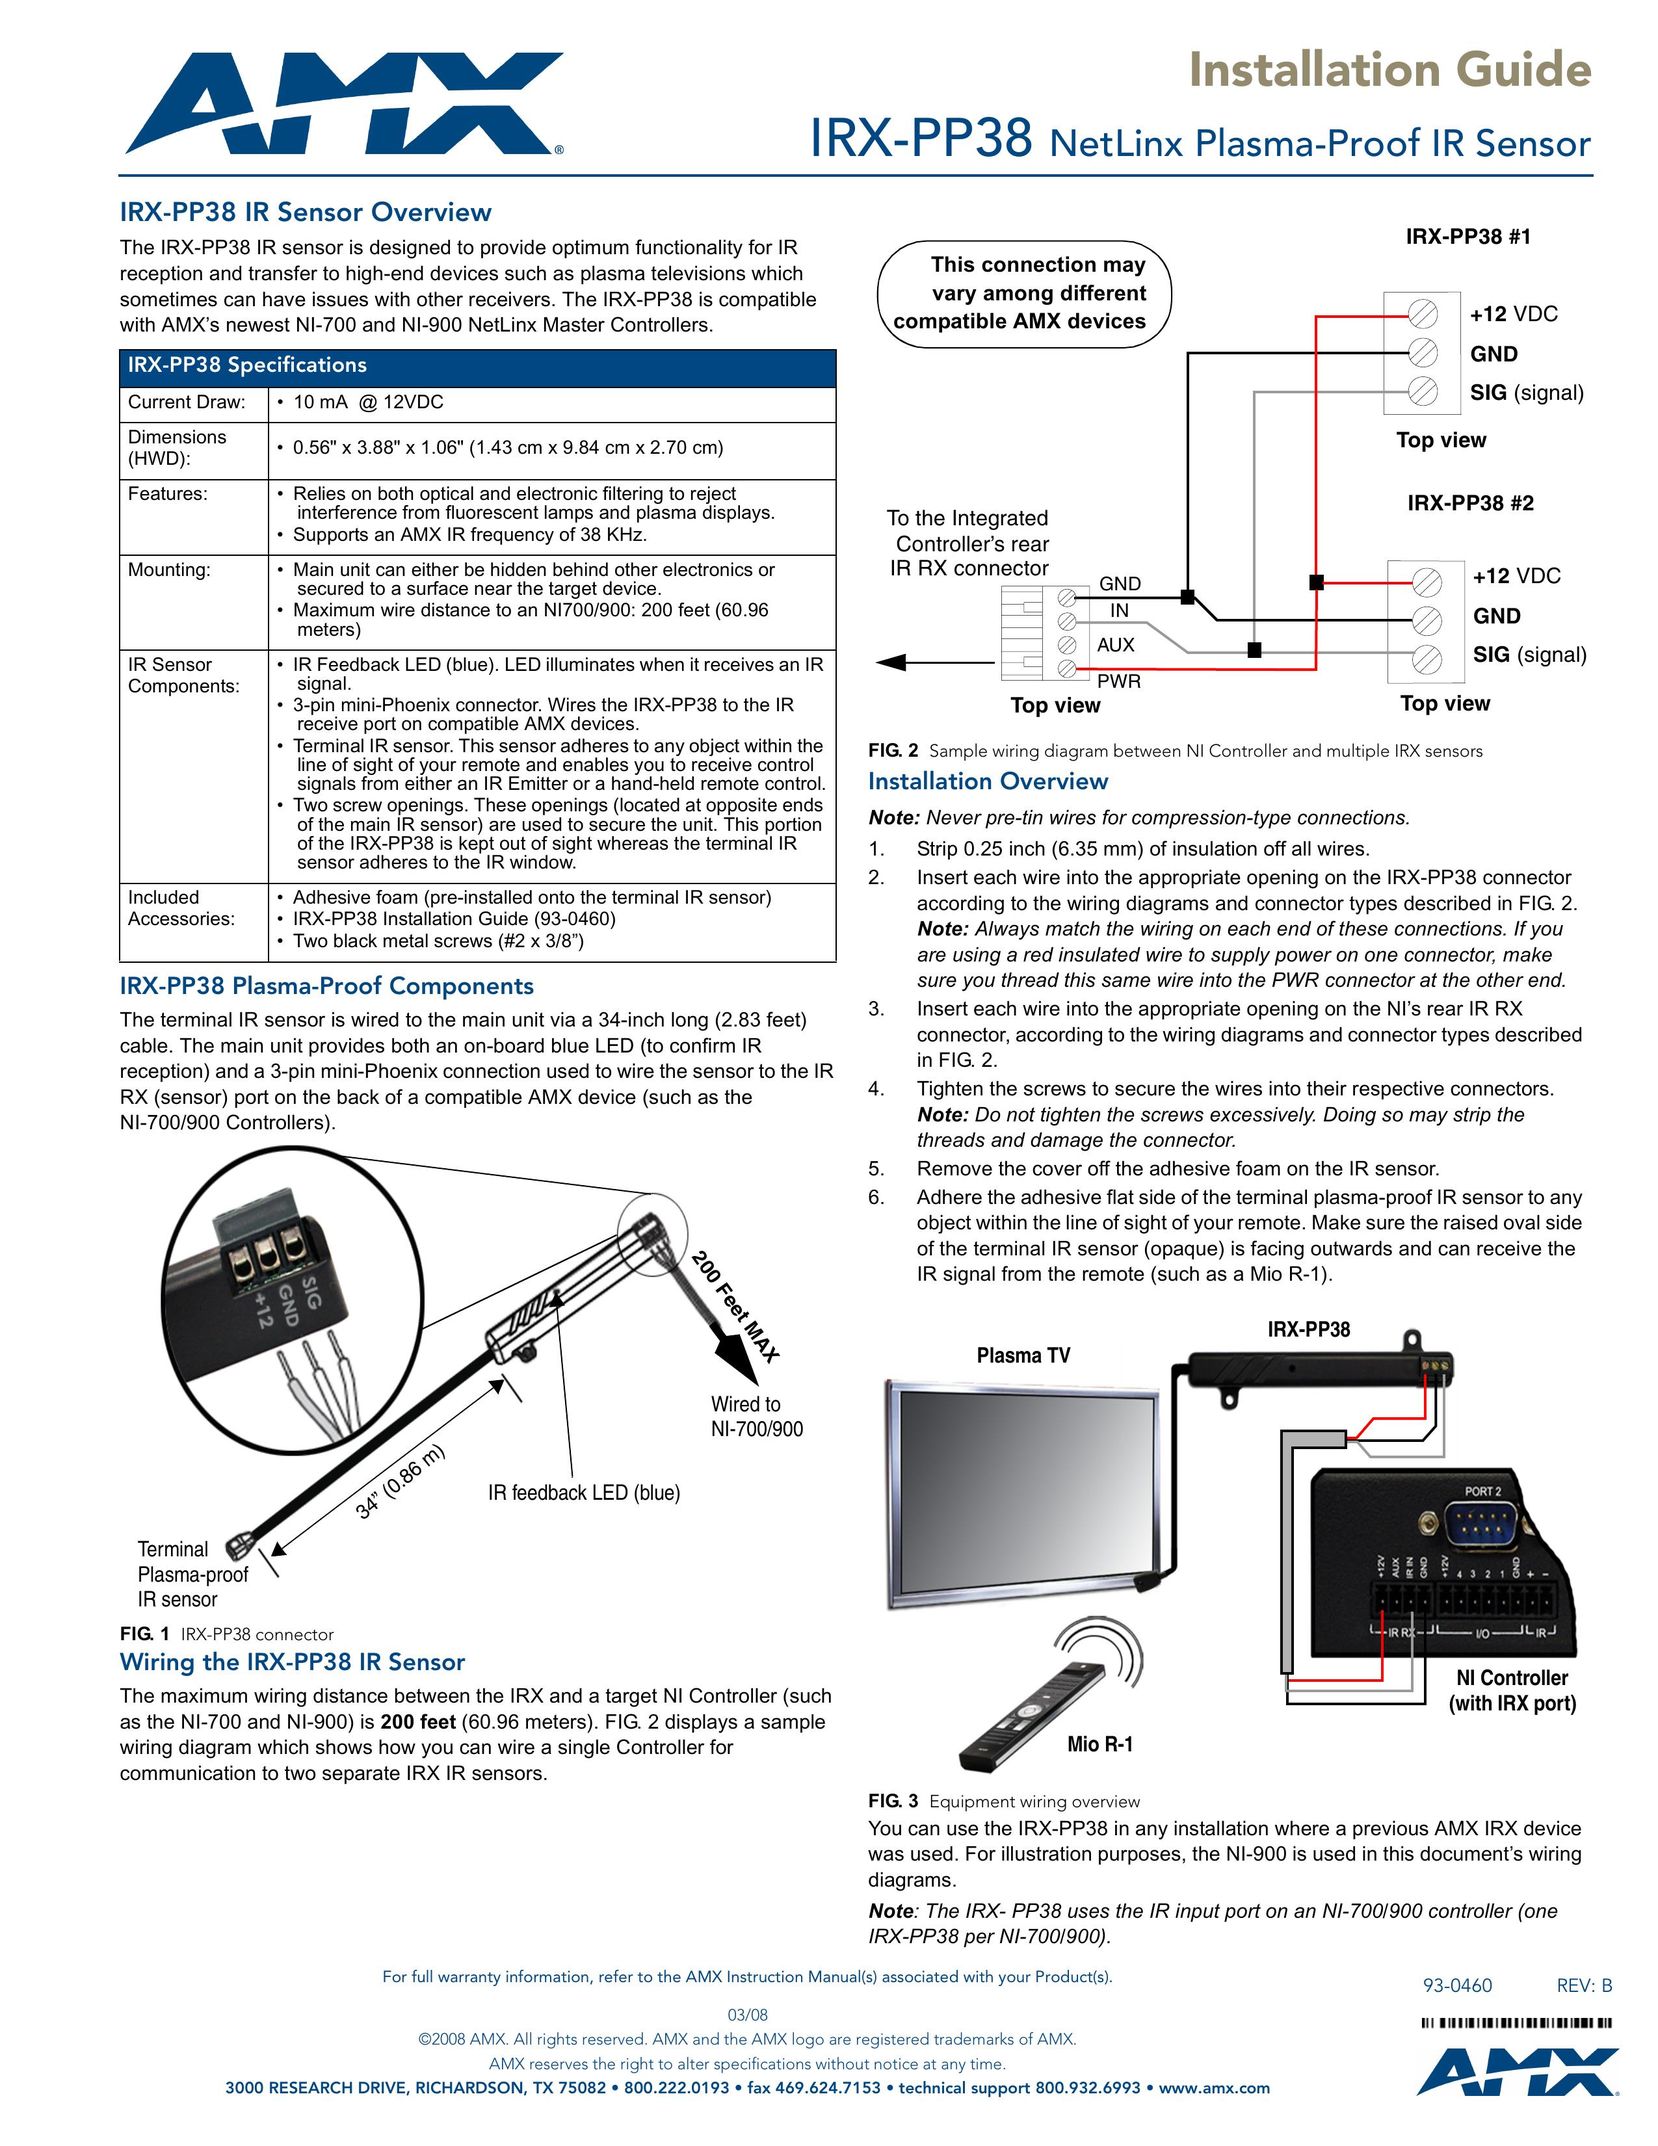 AMX IRX-PP38 Stereo Receiver User Manual